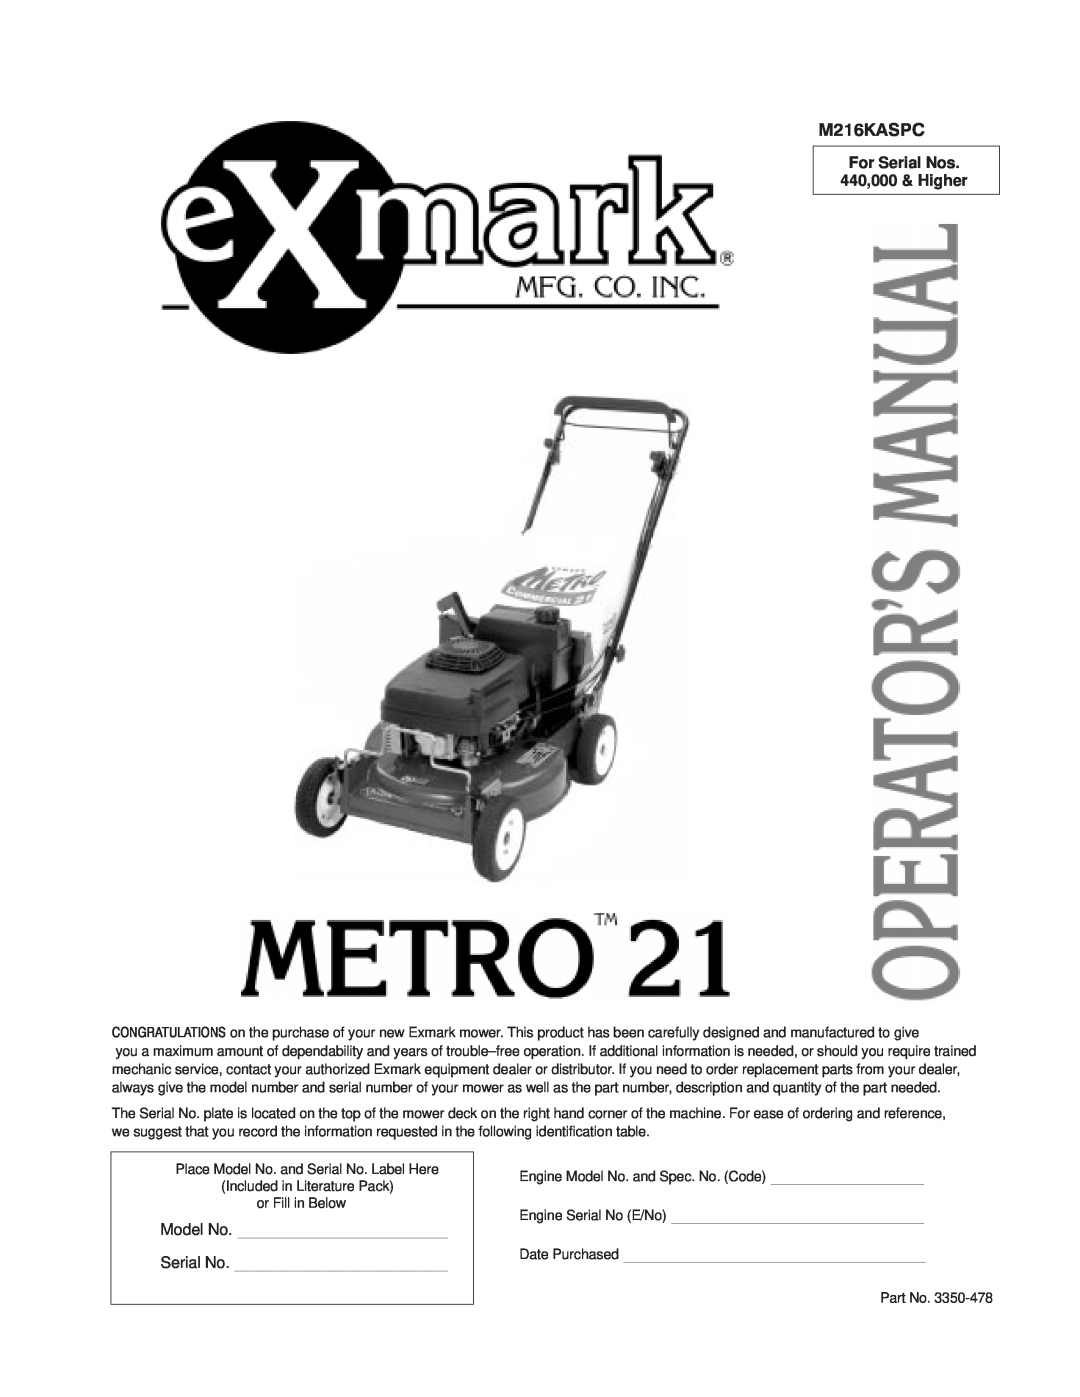 Exmark M216KASPC manual For Serial Nos 440,000 & Higher 